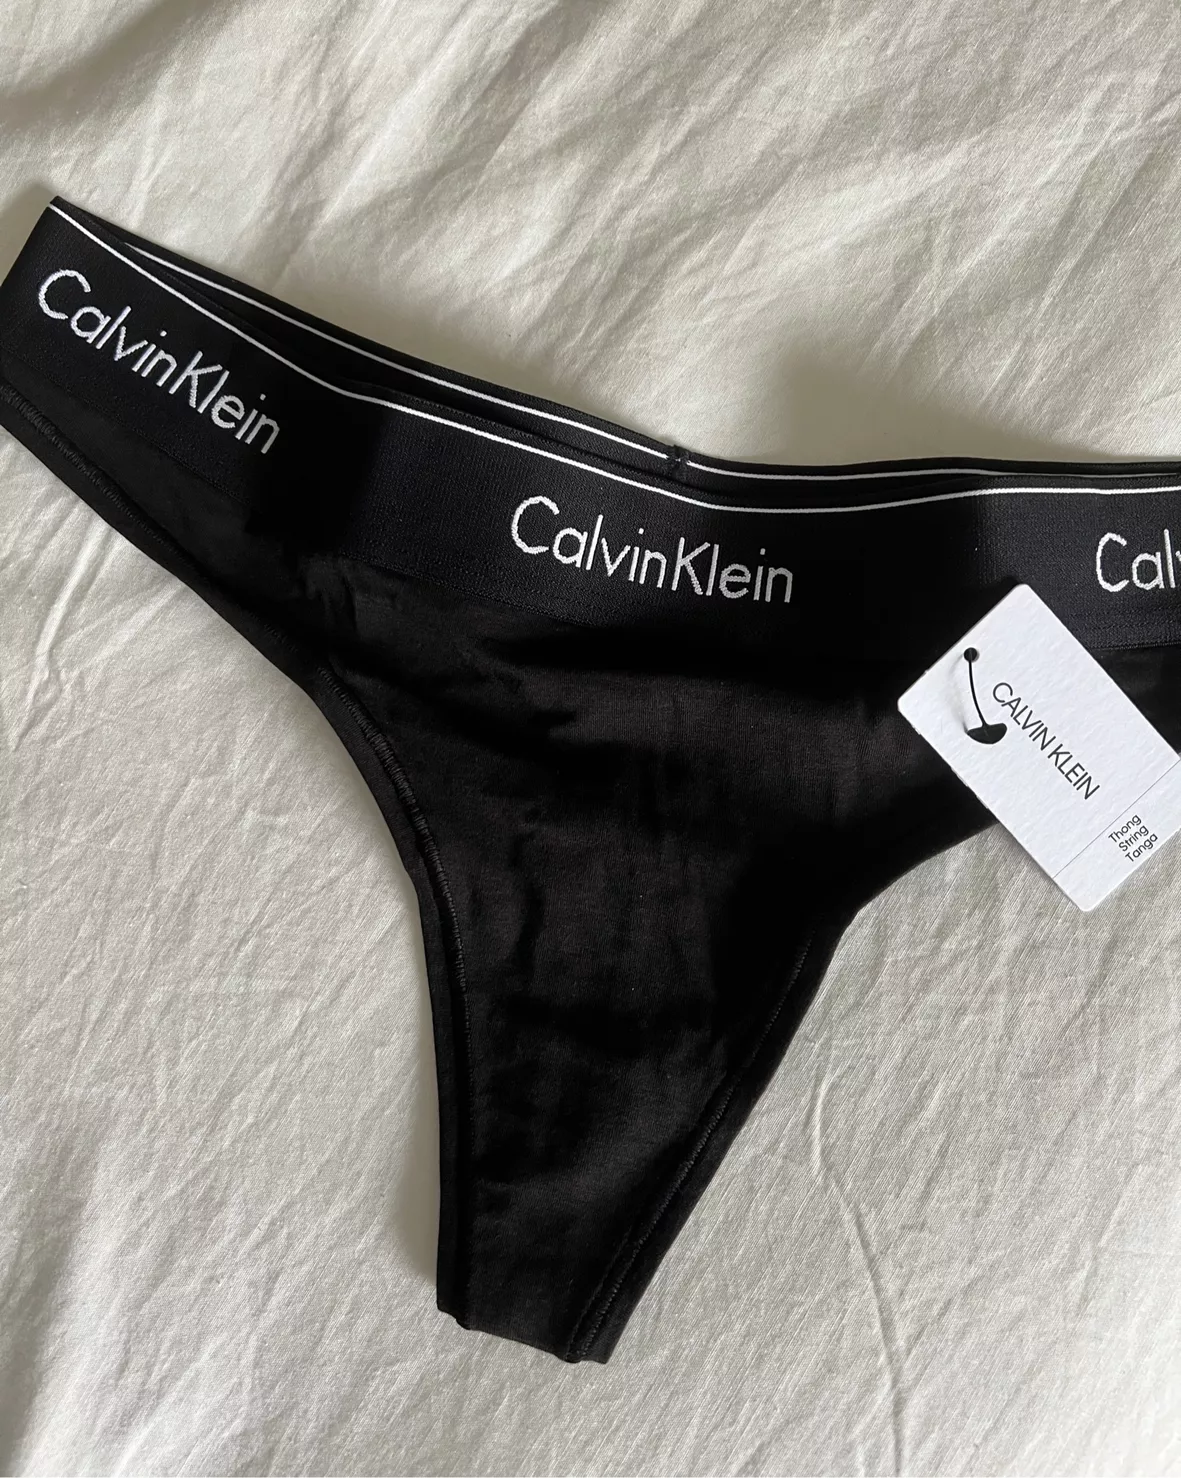 Calvin Klein Logo Bikini Underwear F3787 - Macy's